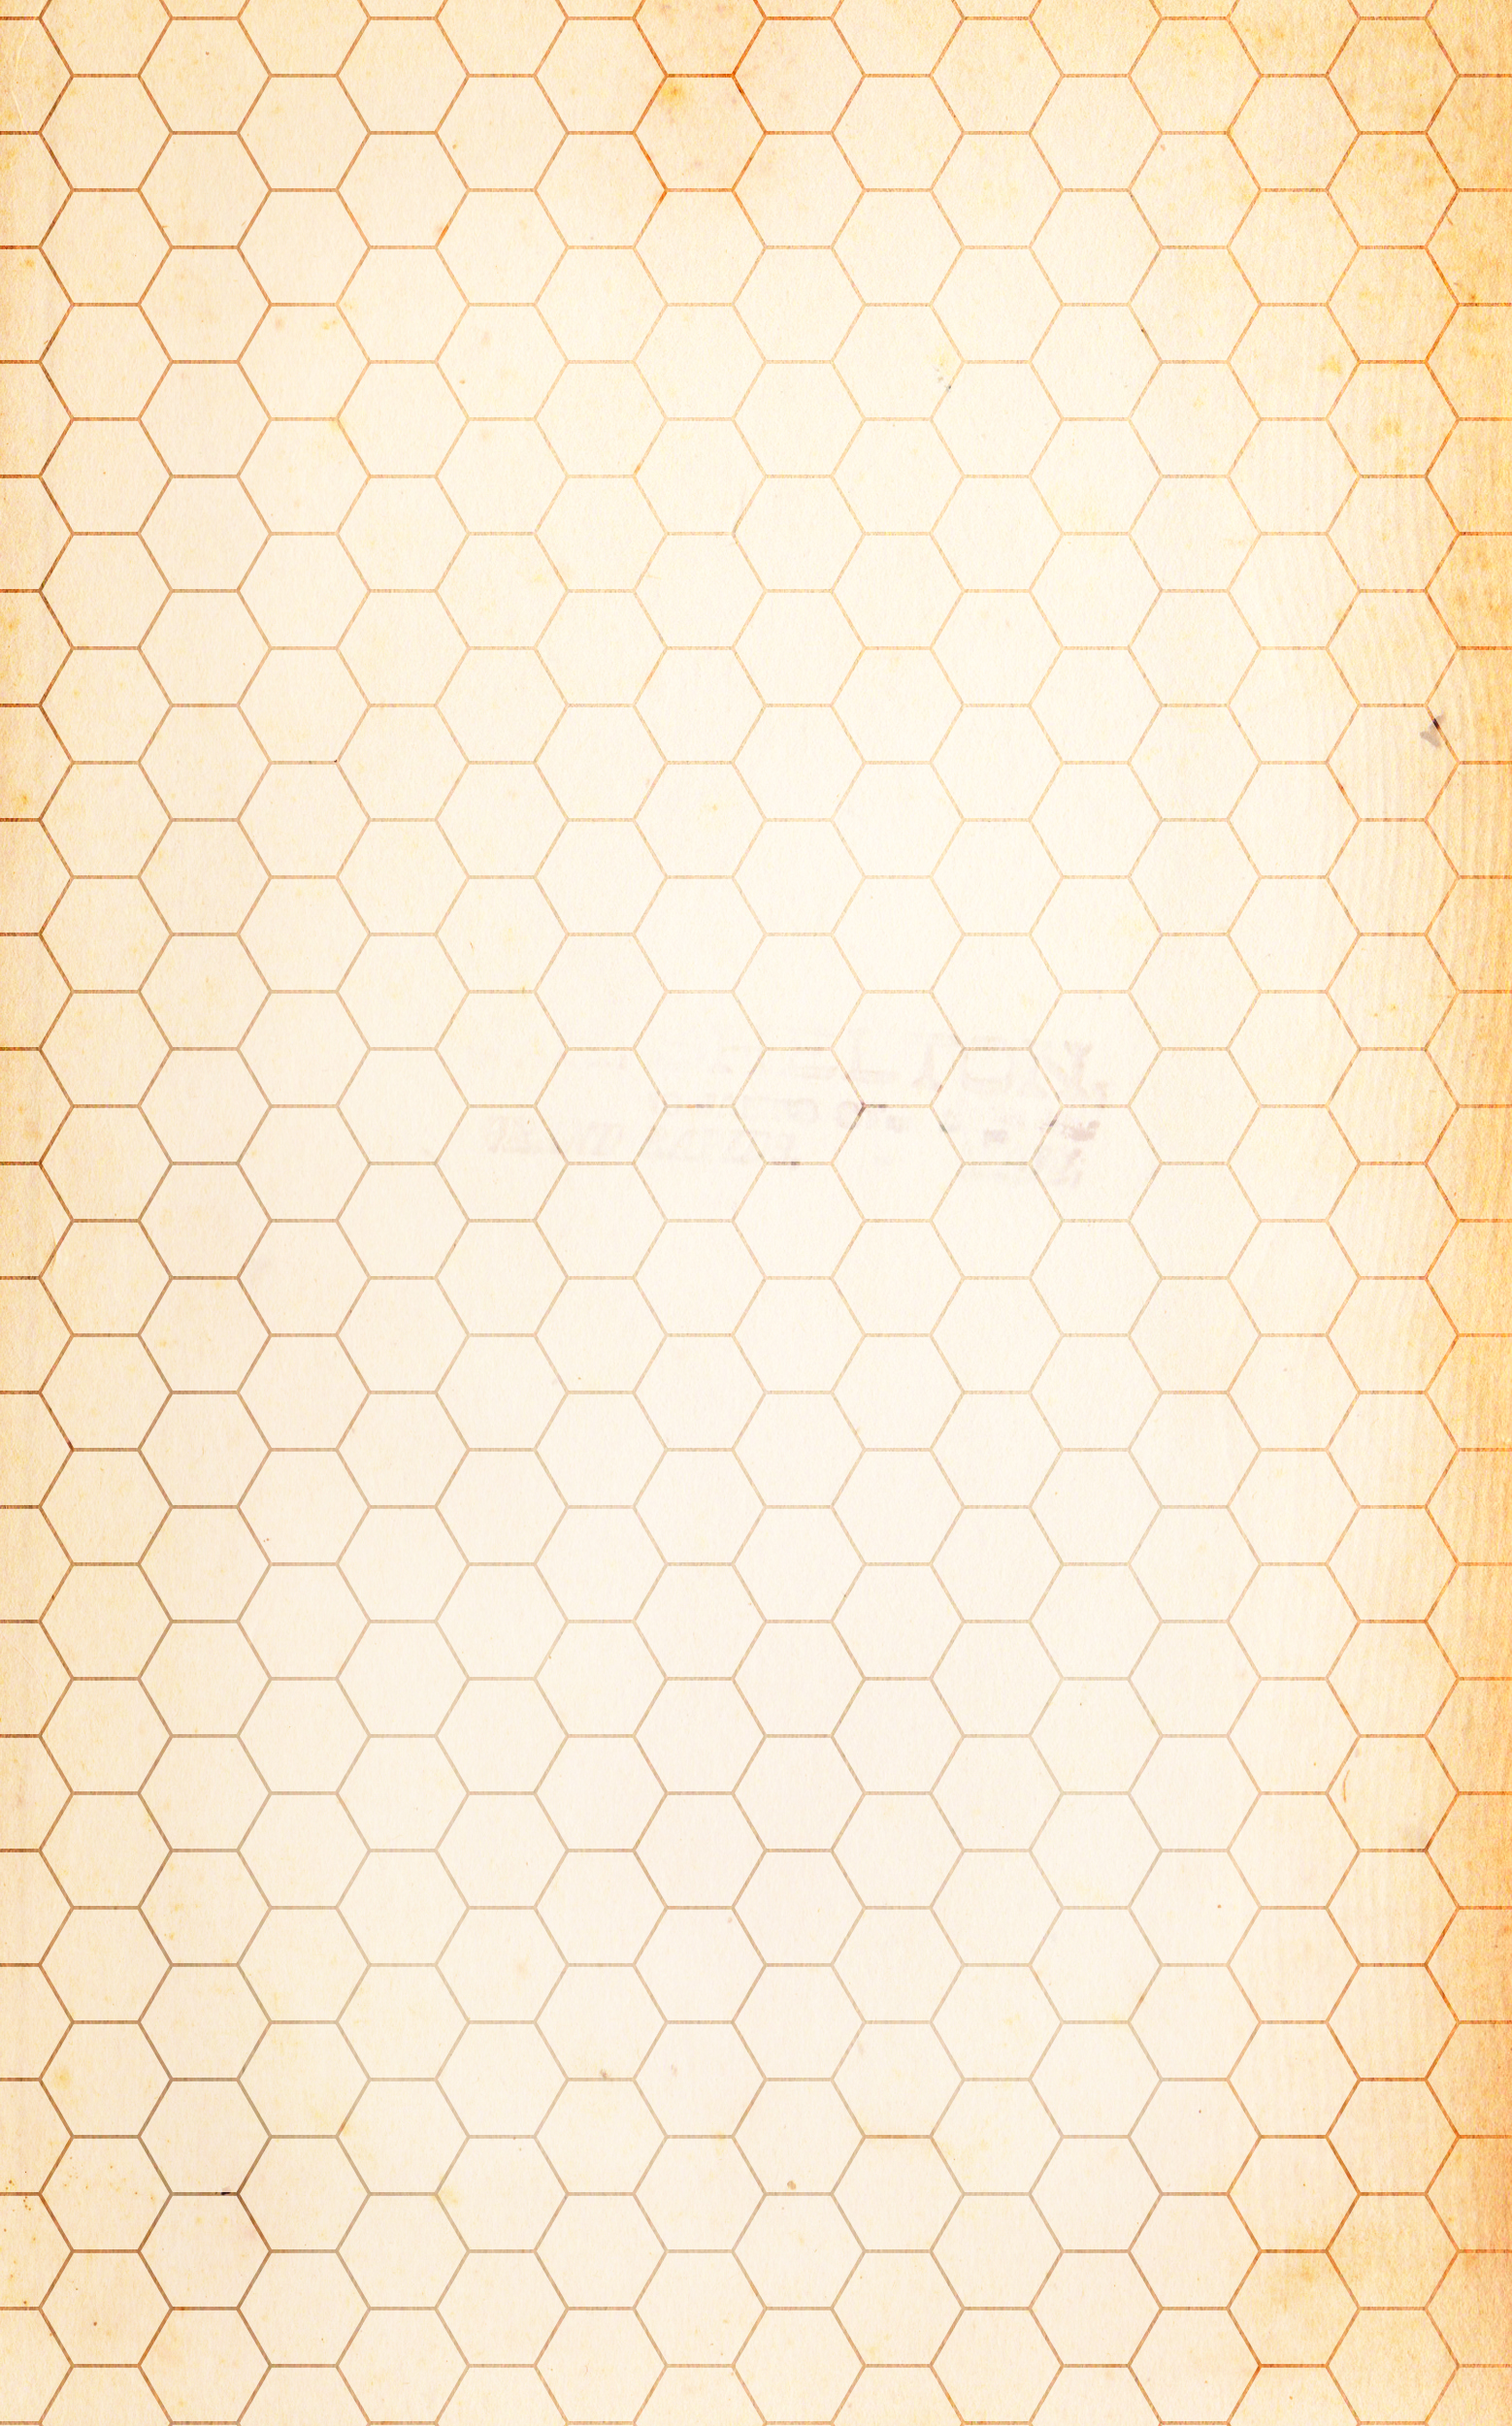 Hexagon pattern grunge texture photo